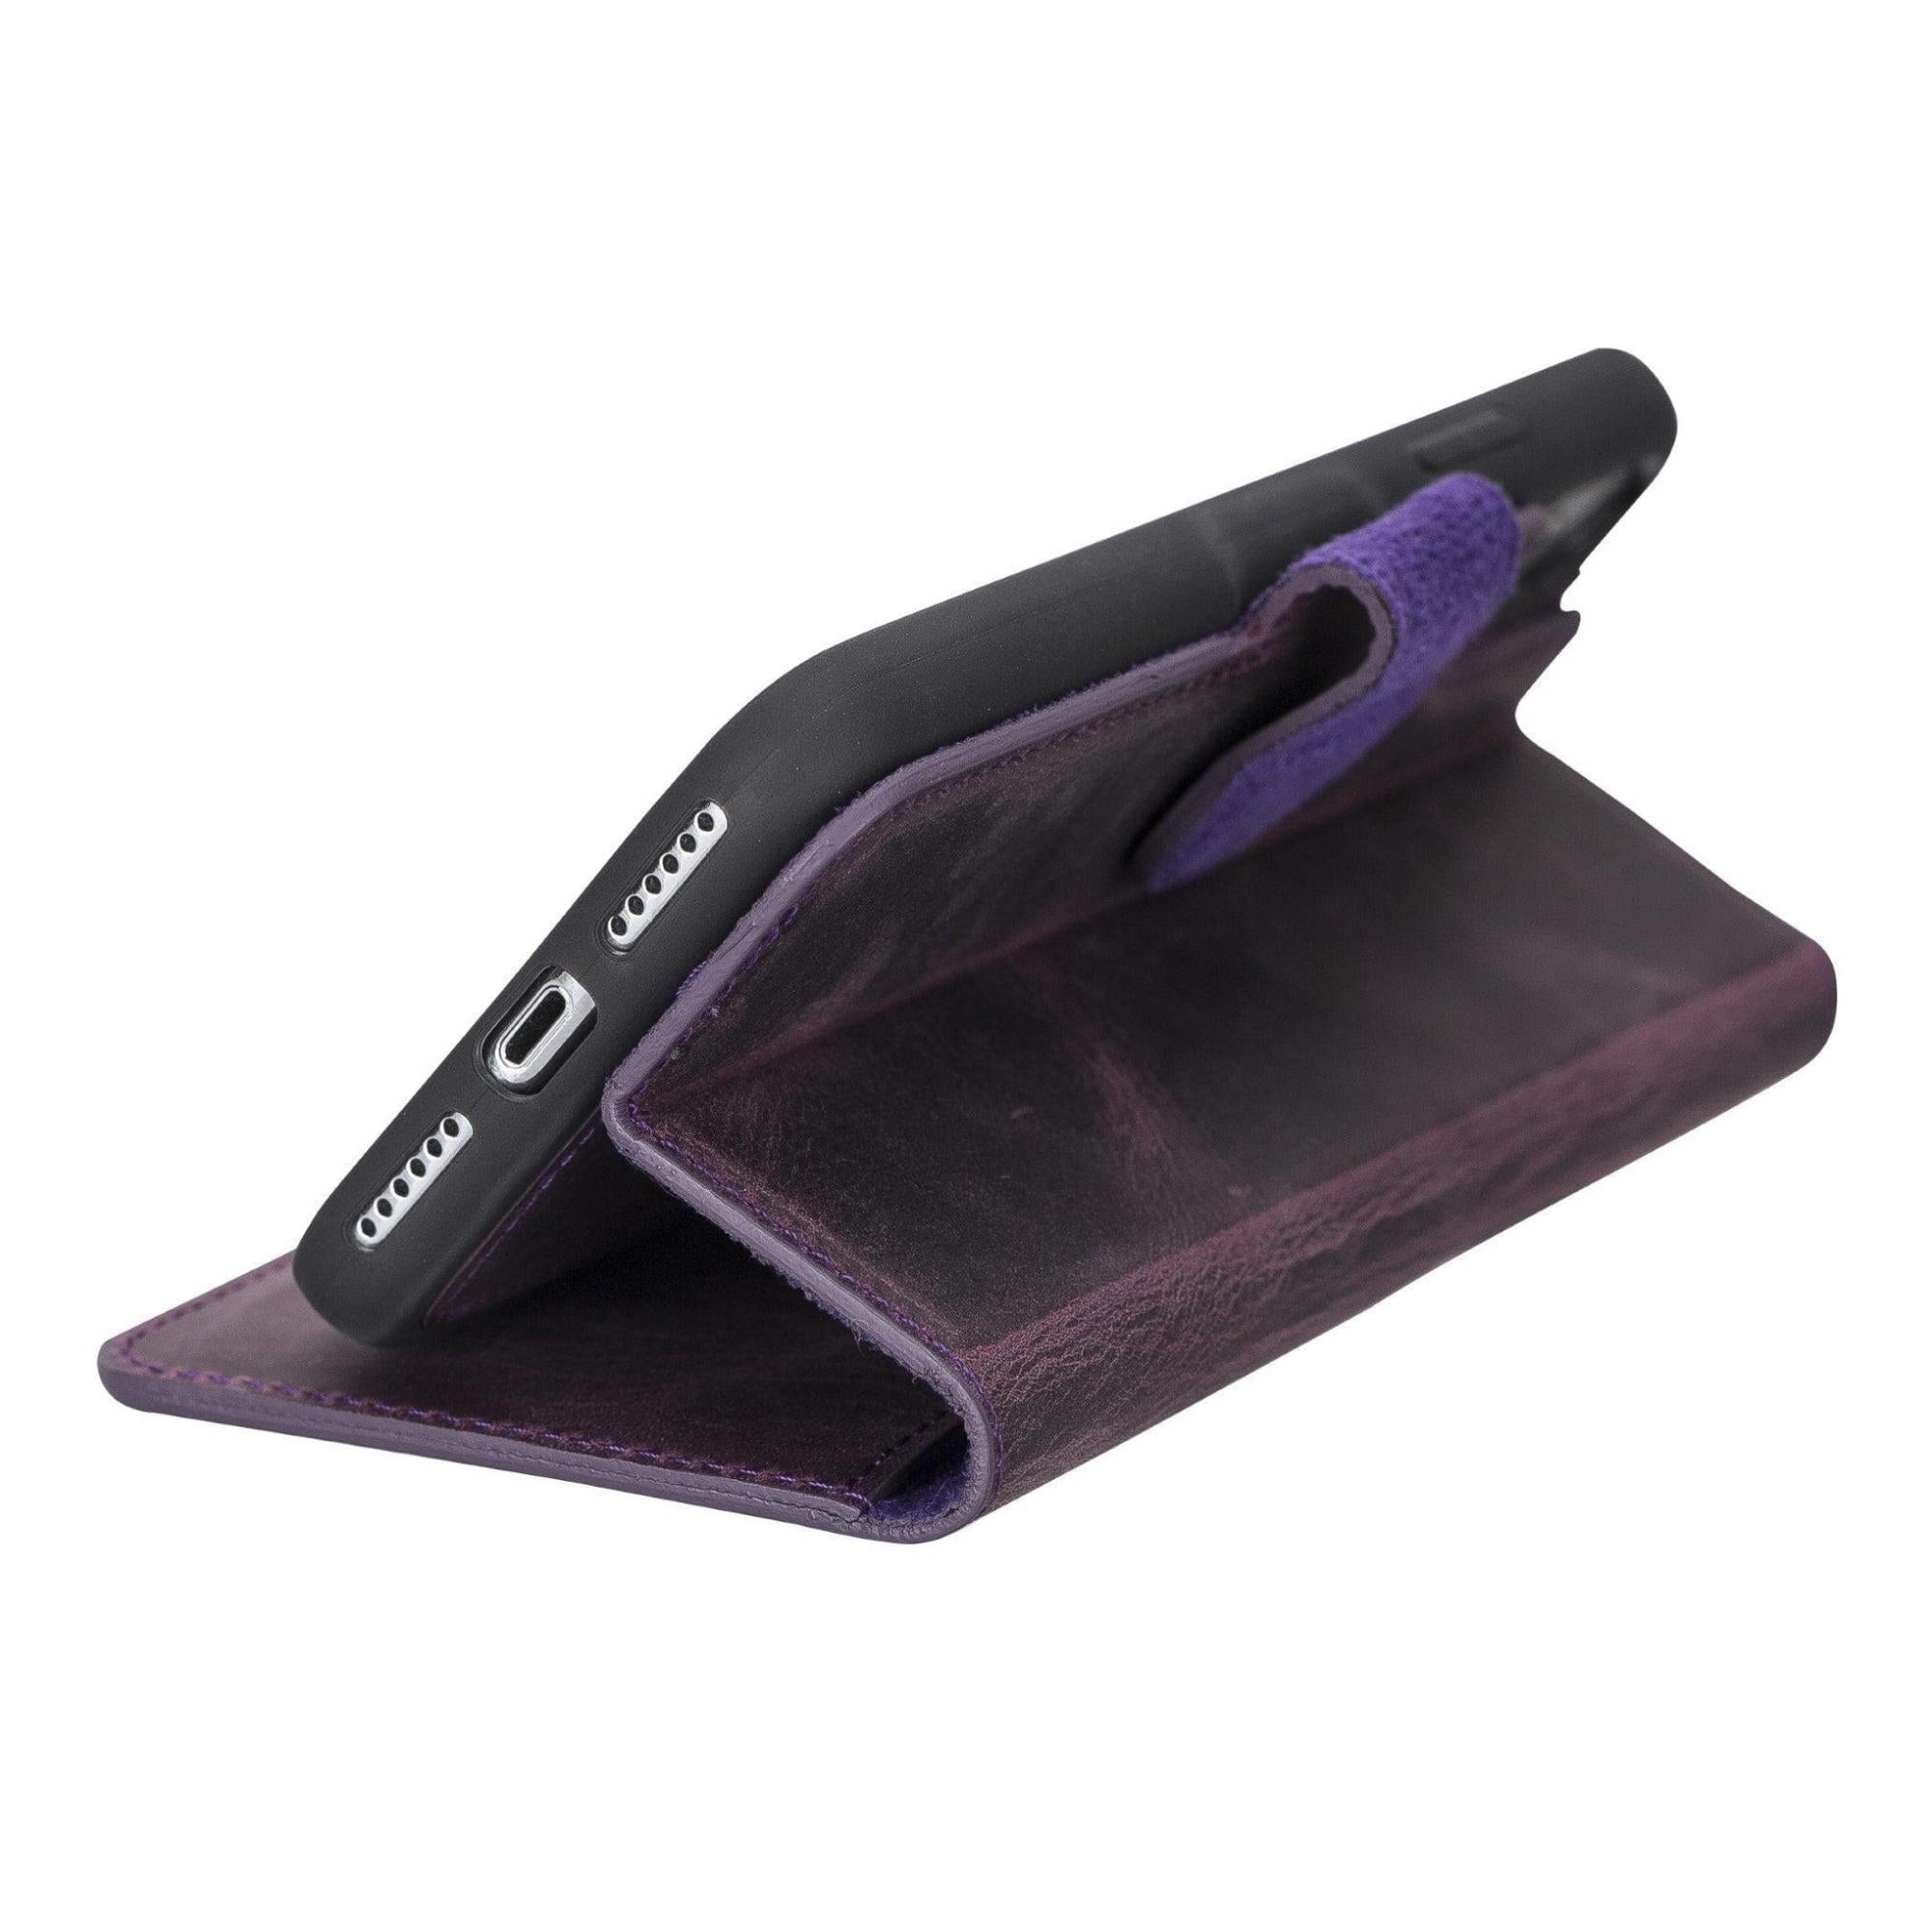 Casper iPhone XR Leather Wallet Case-iPhone XR-Purple--TORONATA